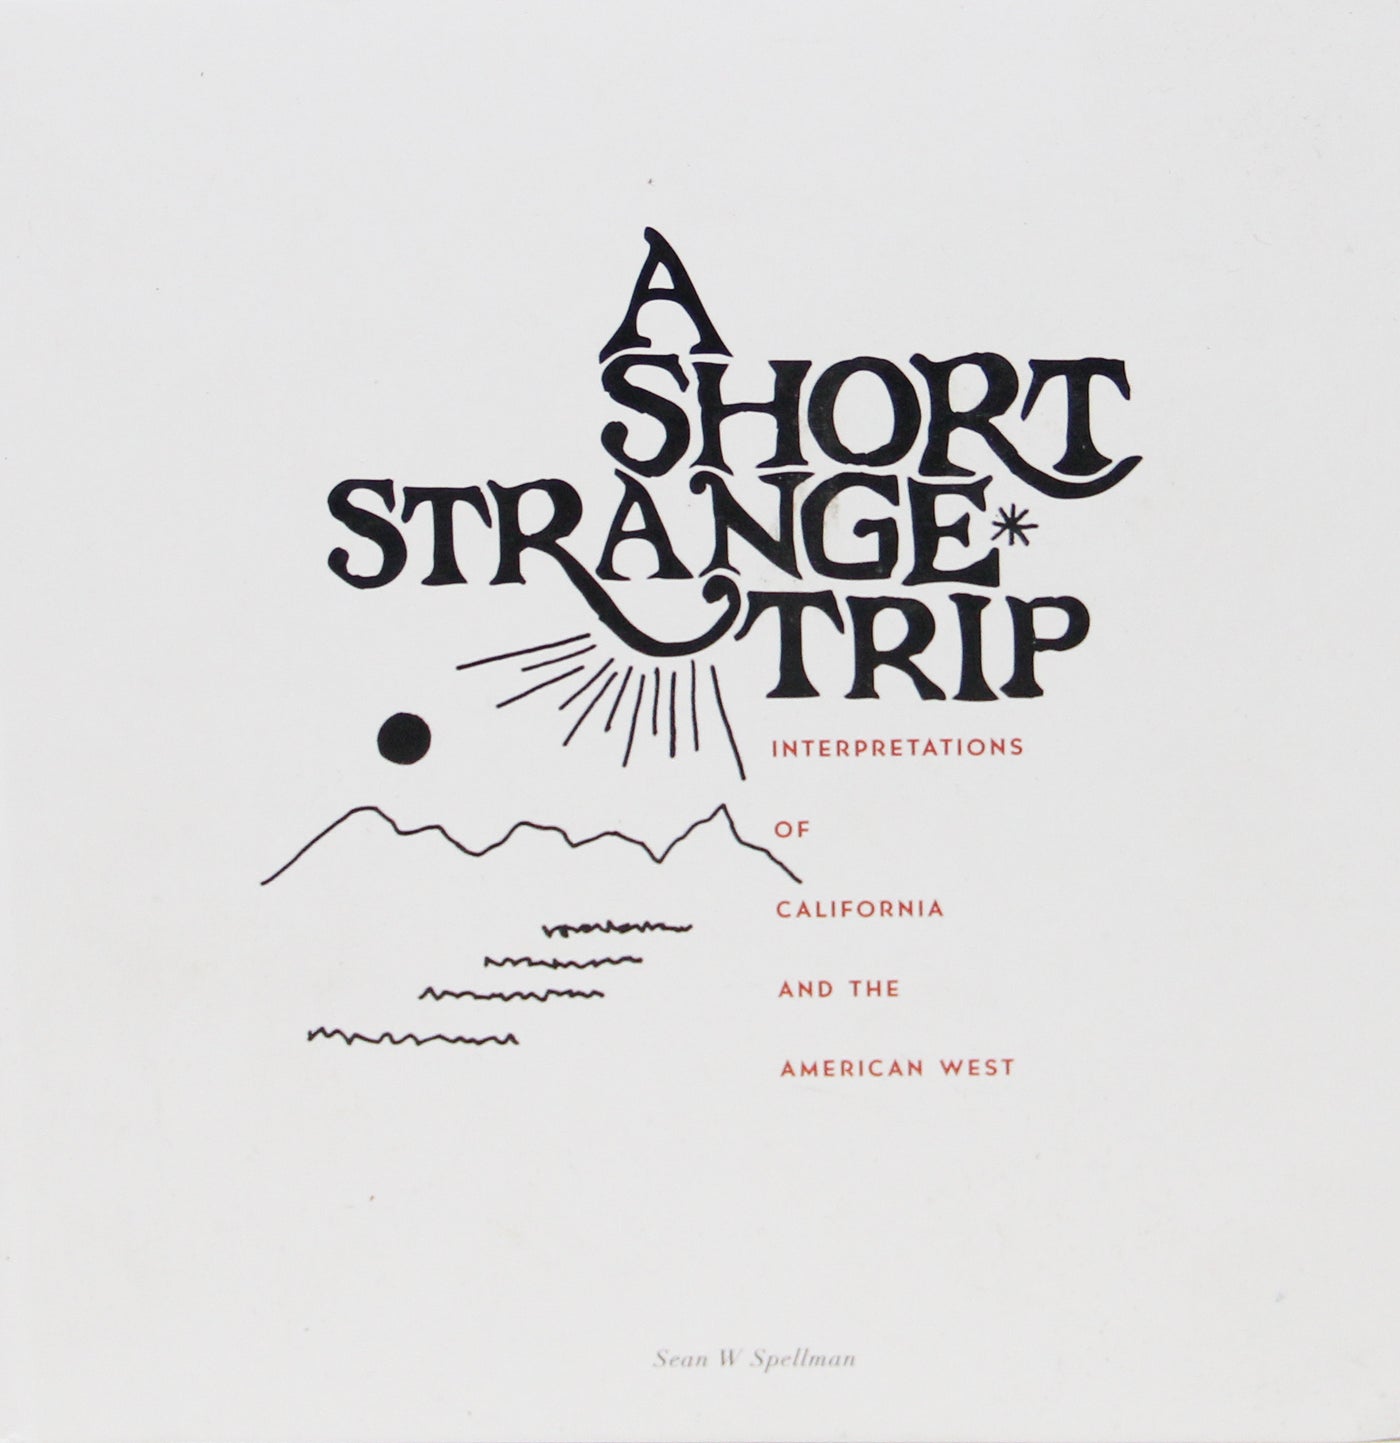 A Short Strange Trip